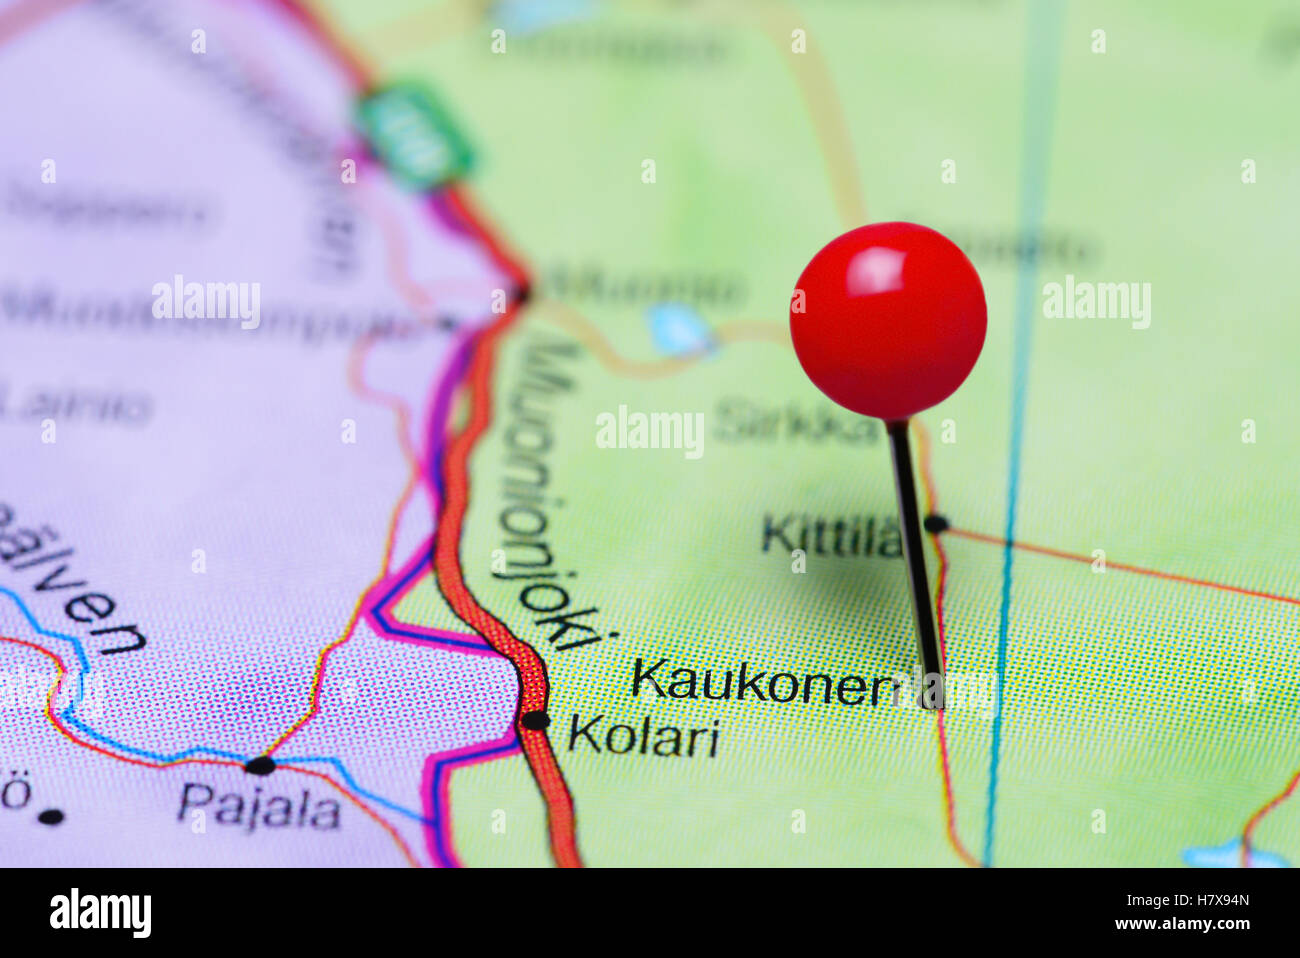 Kaukonen pinned on a map of Finland Stock Photo